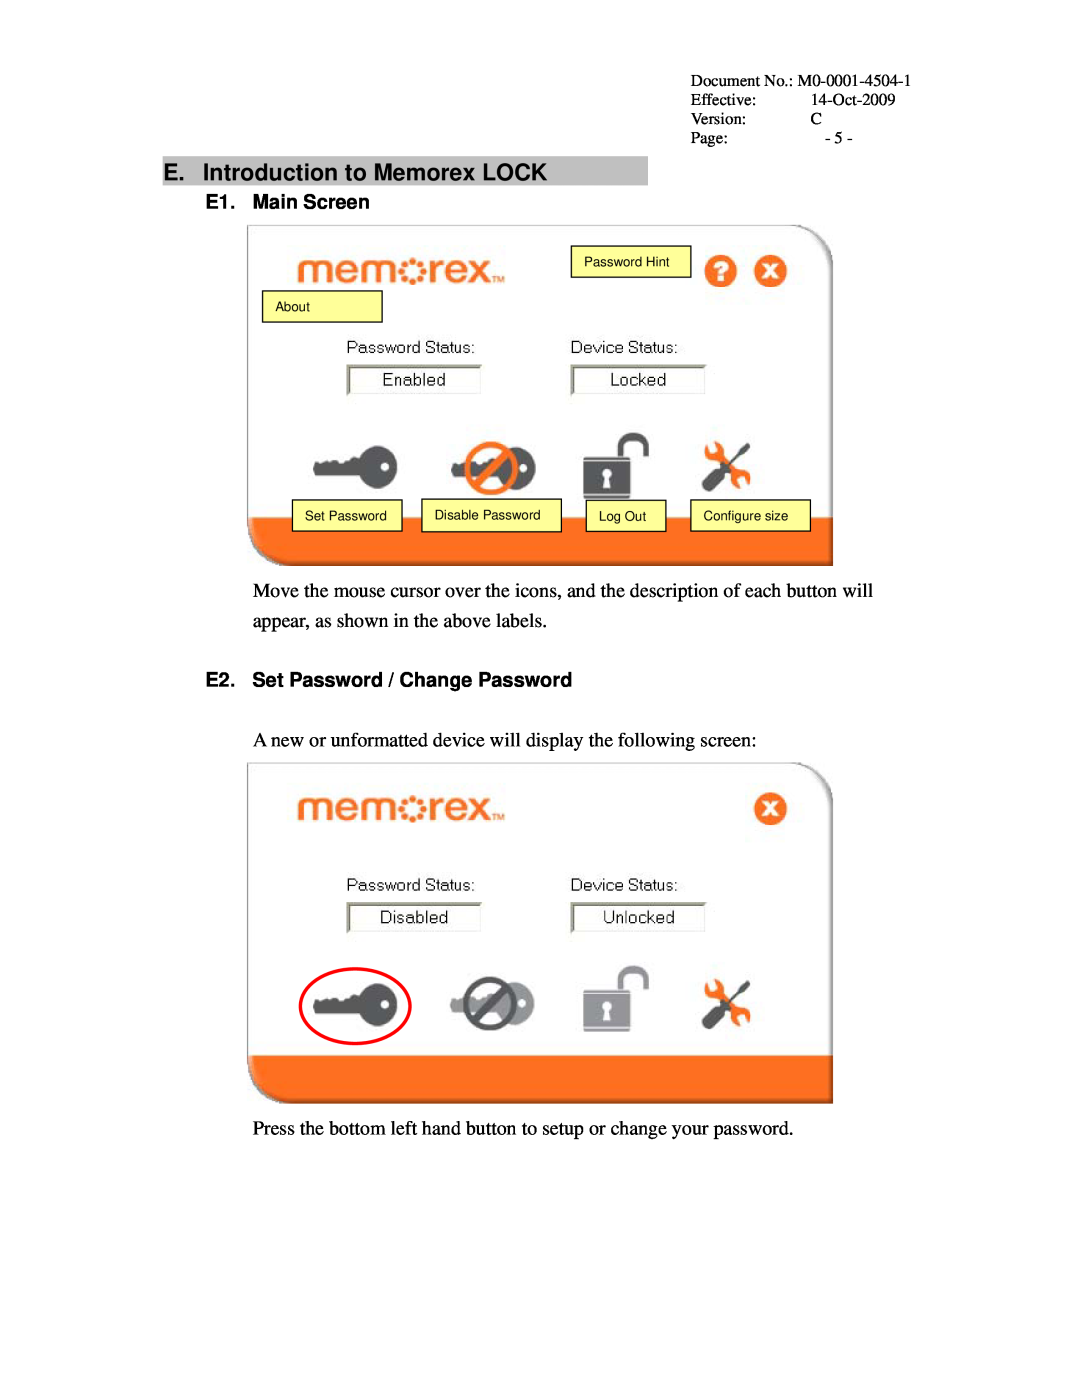 Memorex user manual E. Introduction to Memorex LOCK, E1. Main Screen, E2. Set Password / Change Password 